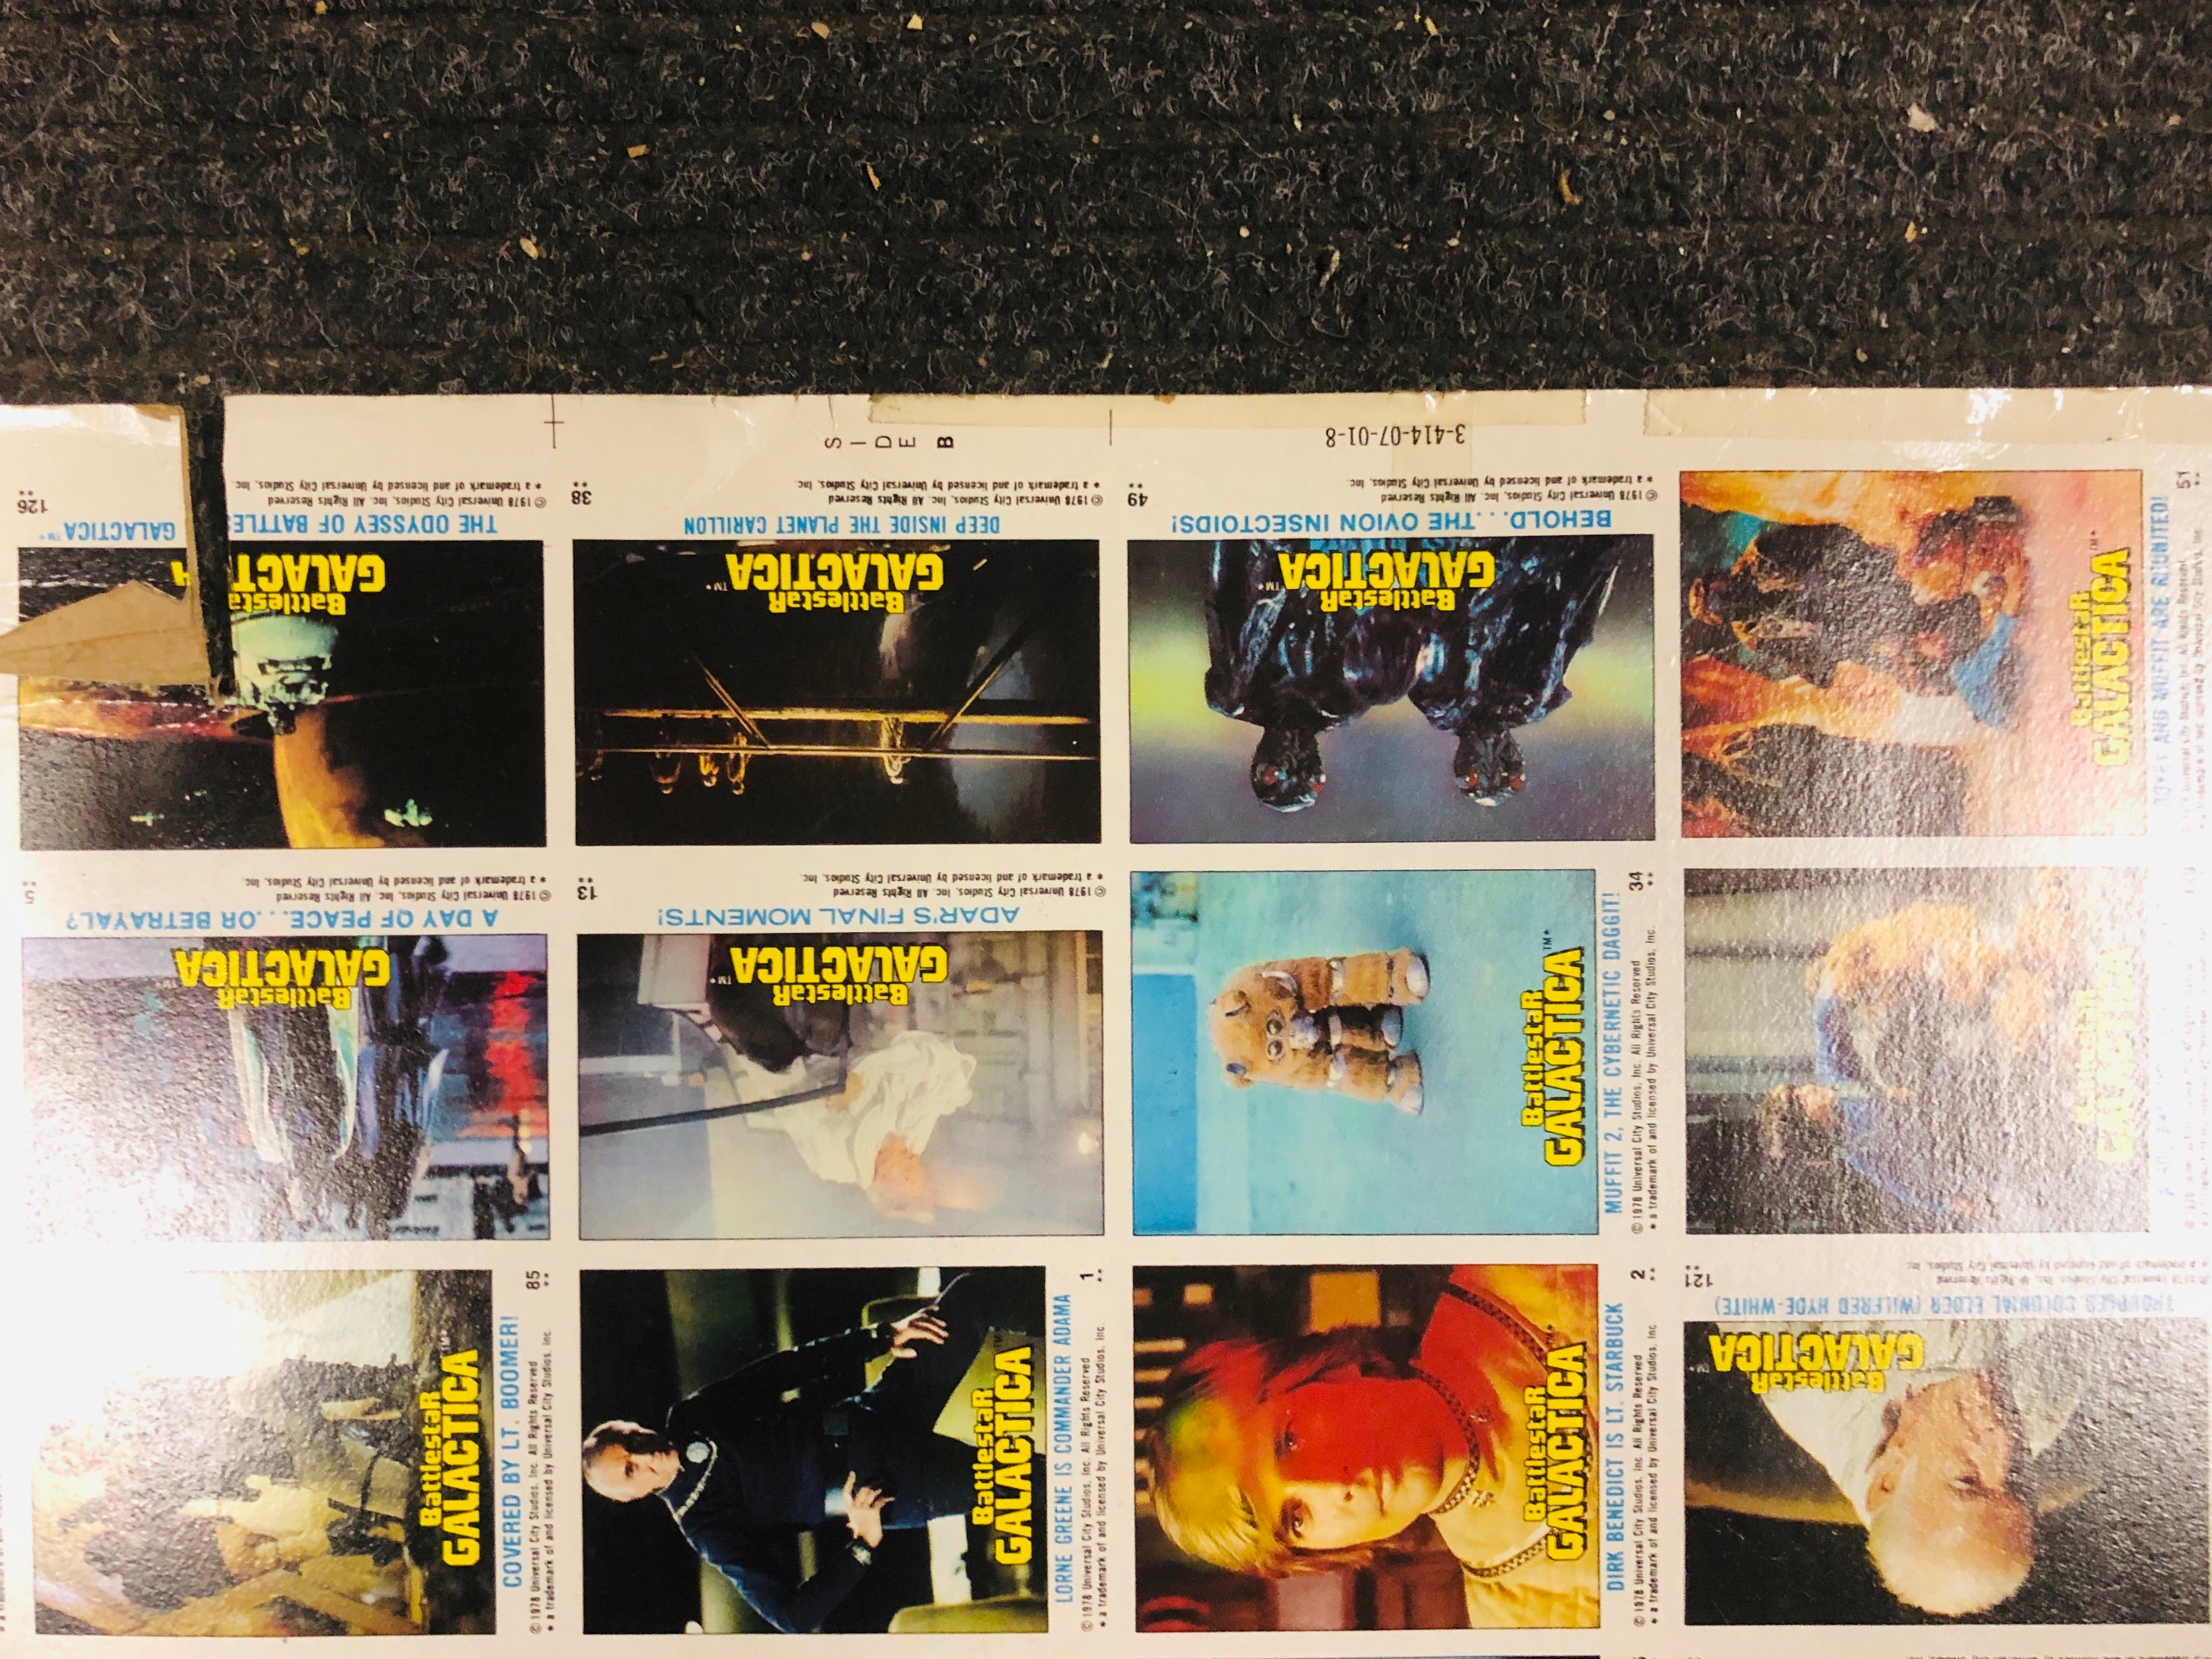 1978 Battlestar Galactica movie cards rare uncut sheet